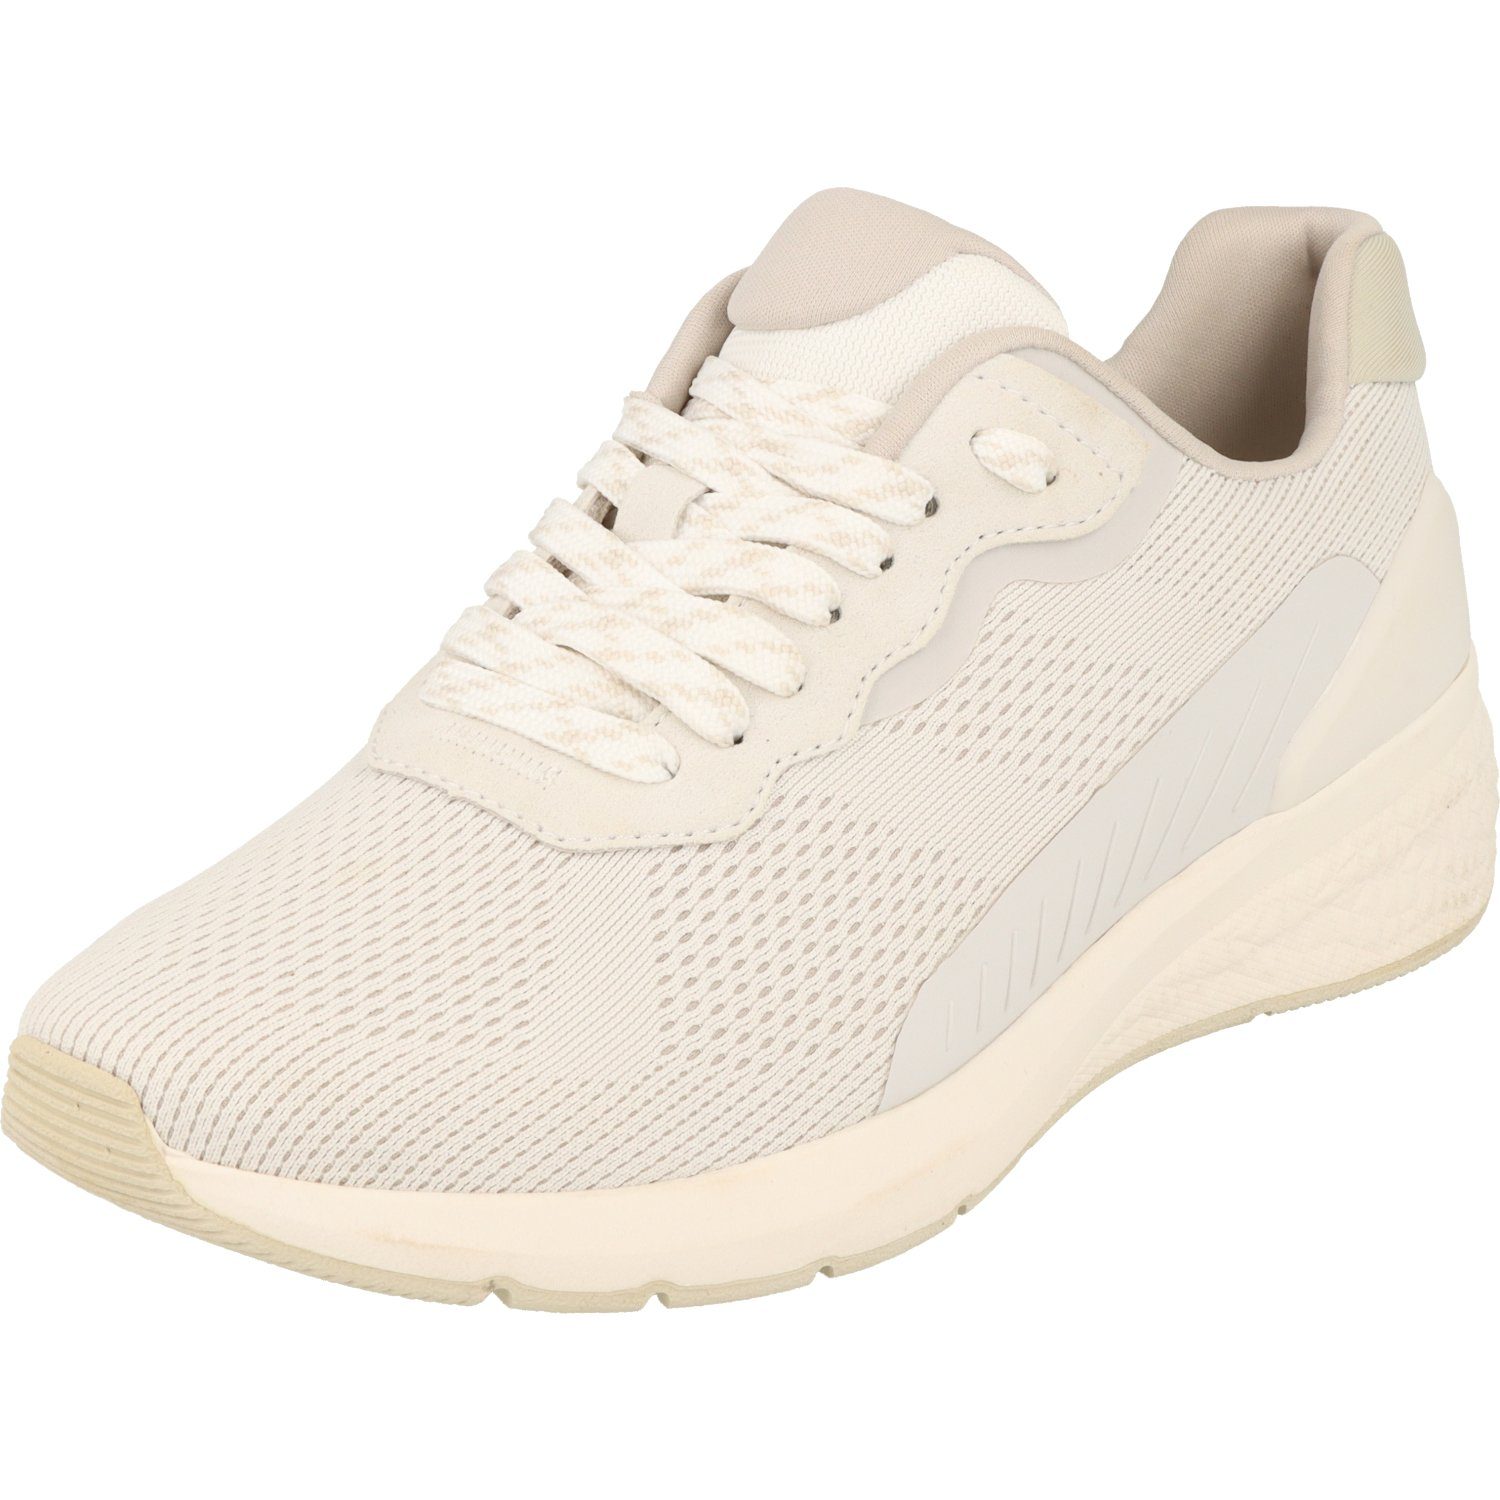 Tamaris Damen Schuhe sportliche Sneaker Uni Offwhite Halbschuhe 1-23705-20 Schnürschuh